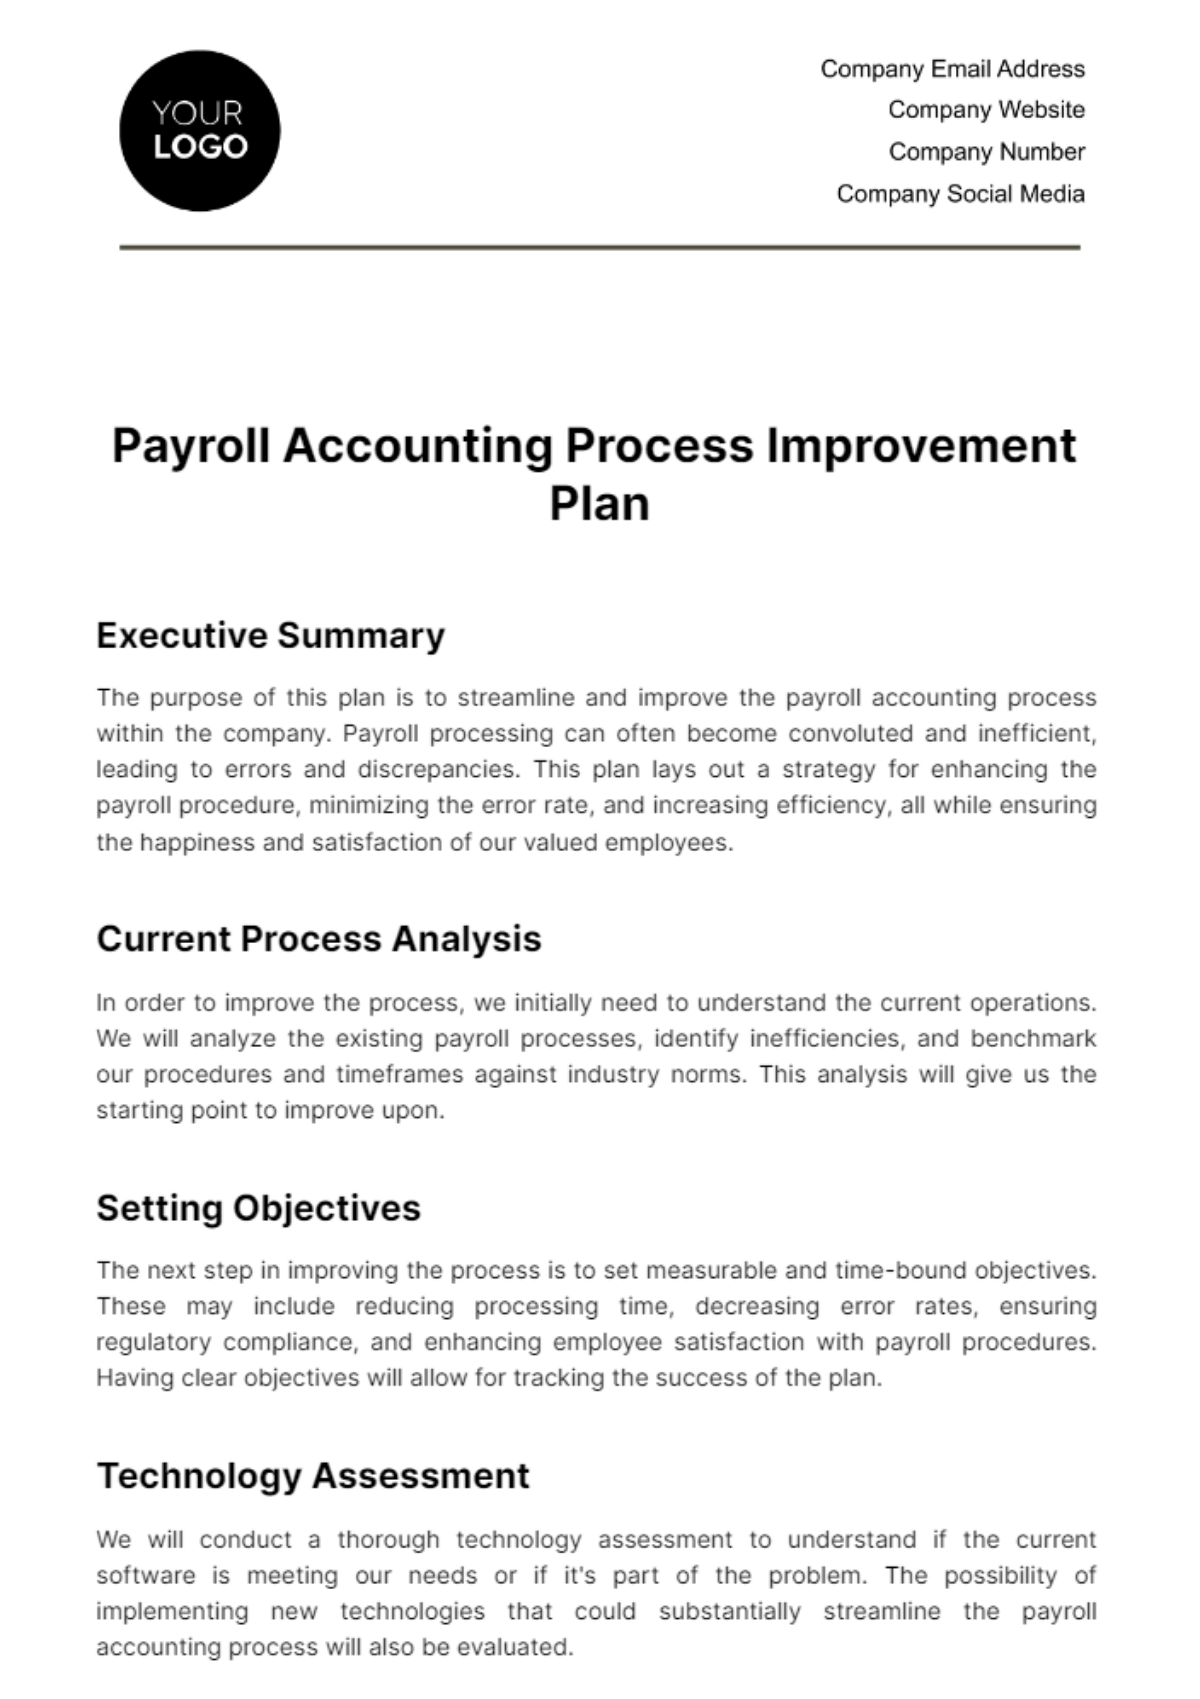 Payroll Accounting Process Improvement Plan Template